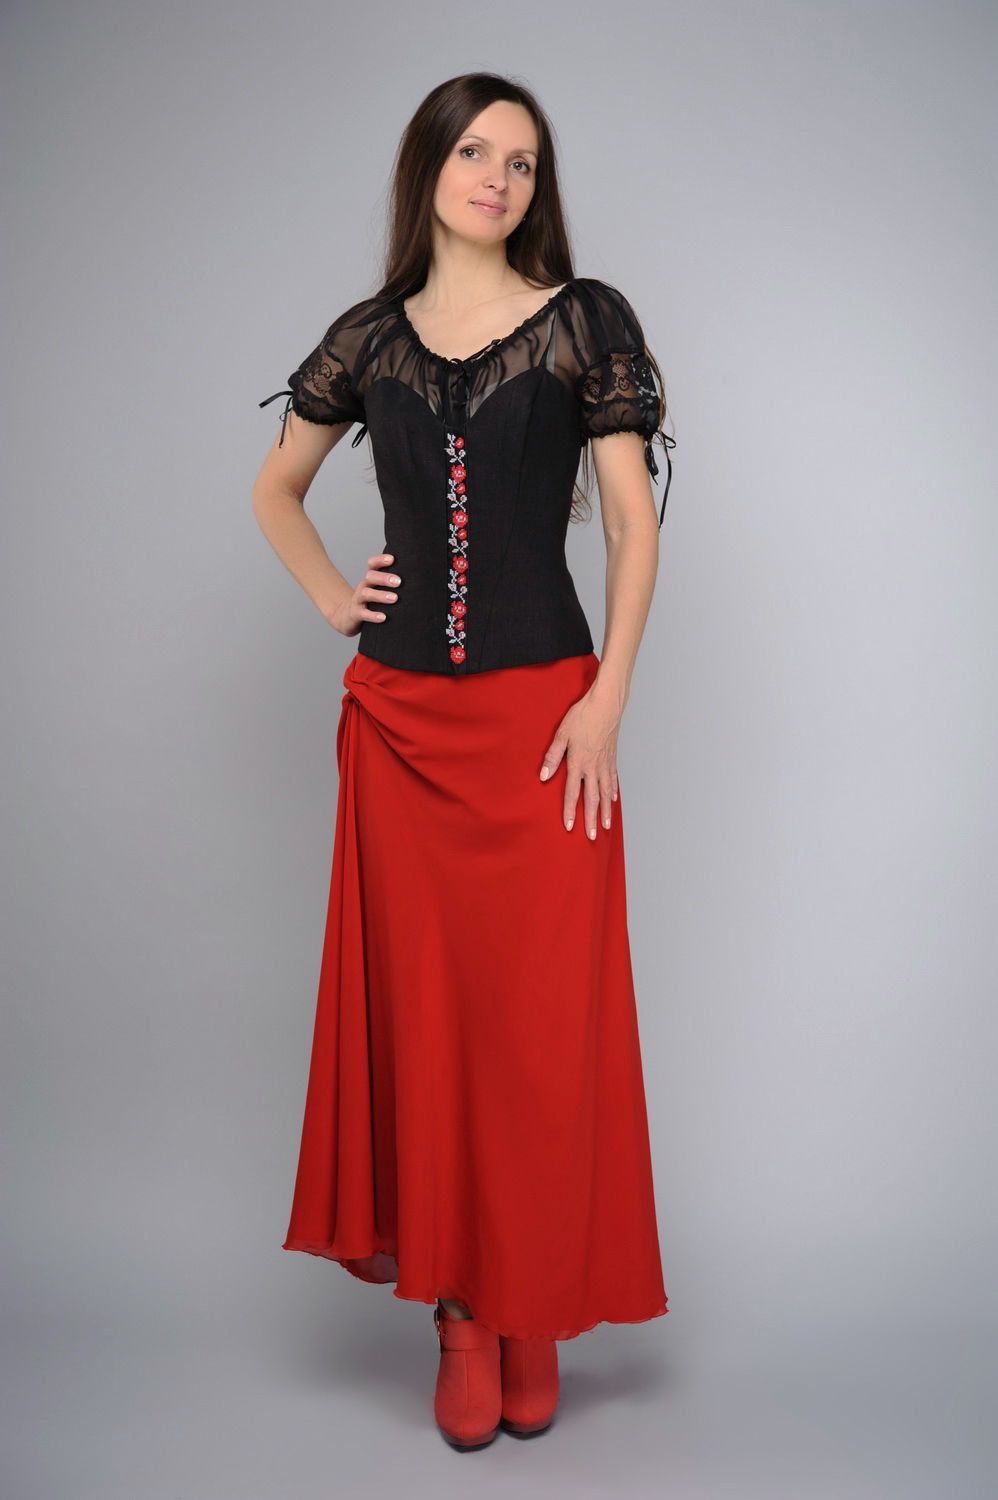 Ropa de mujer: falda, blusa, corset foto 2